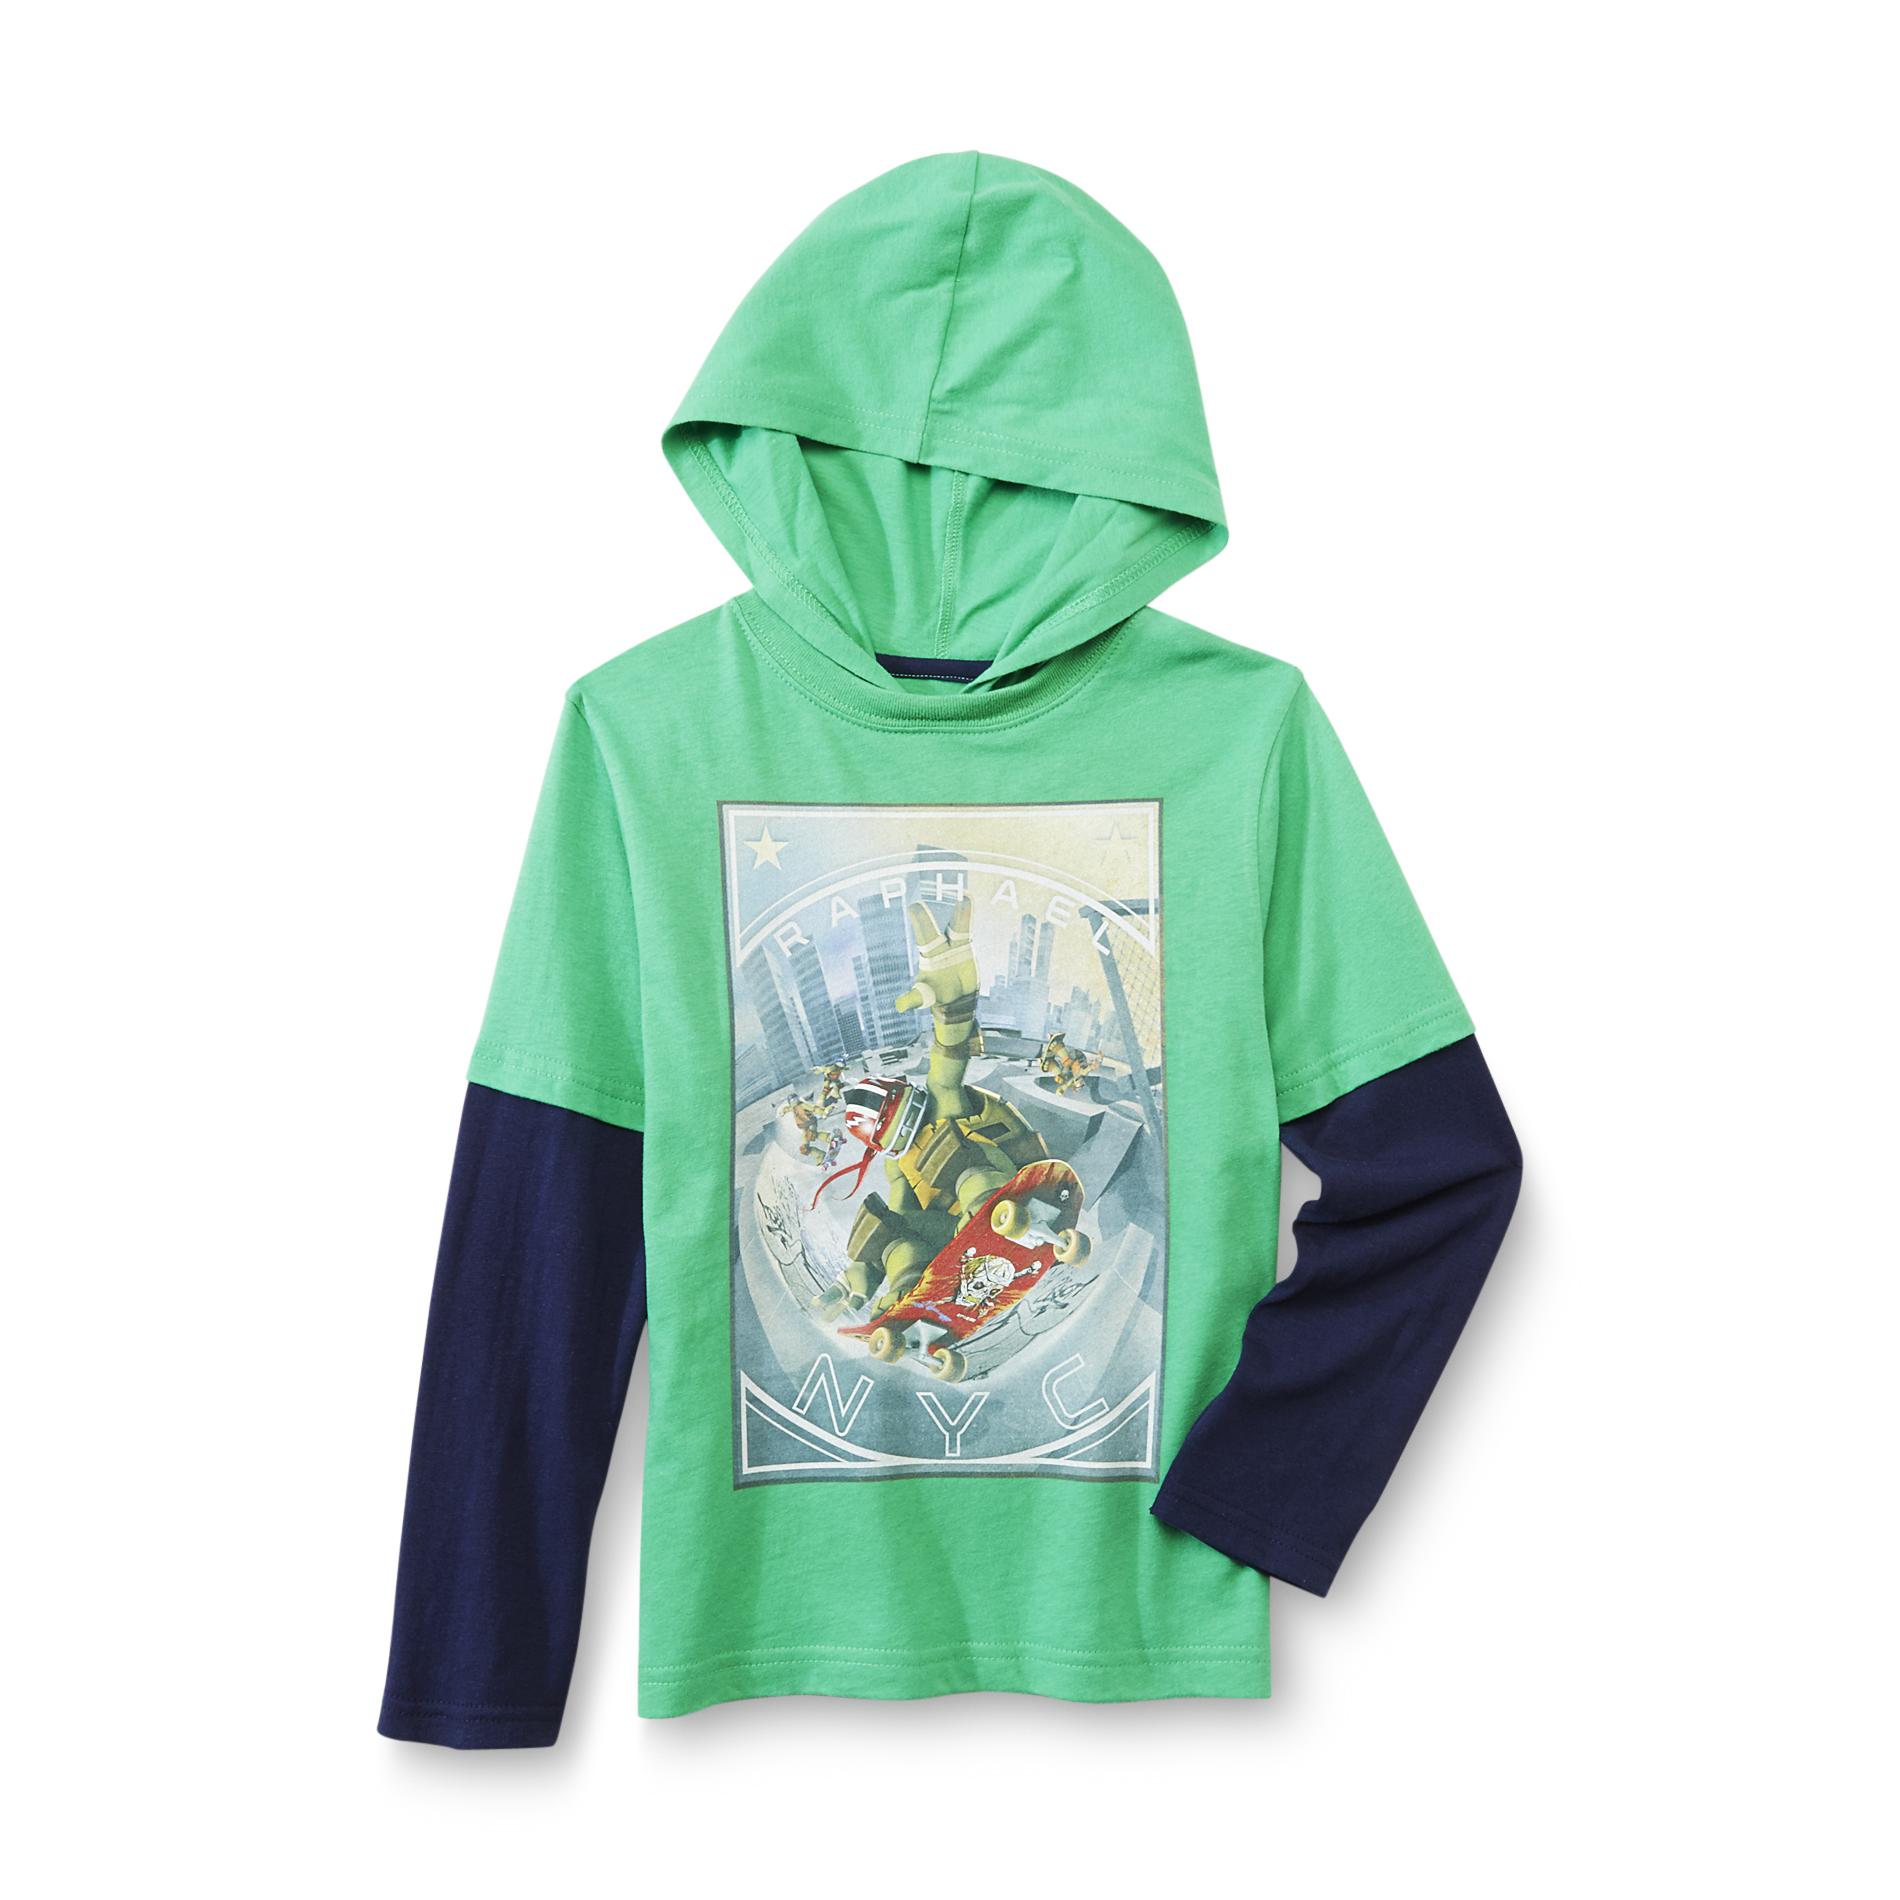 Nickelodeon Teenage Mutants Ninja Turtles Boy's Hooded T-Shirt